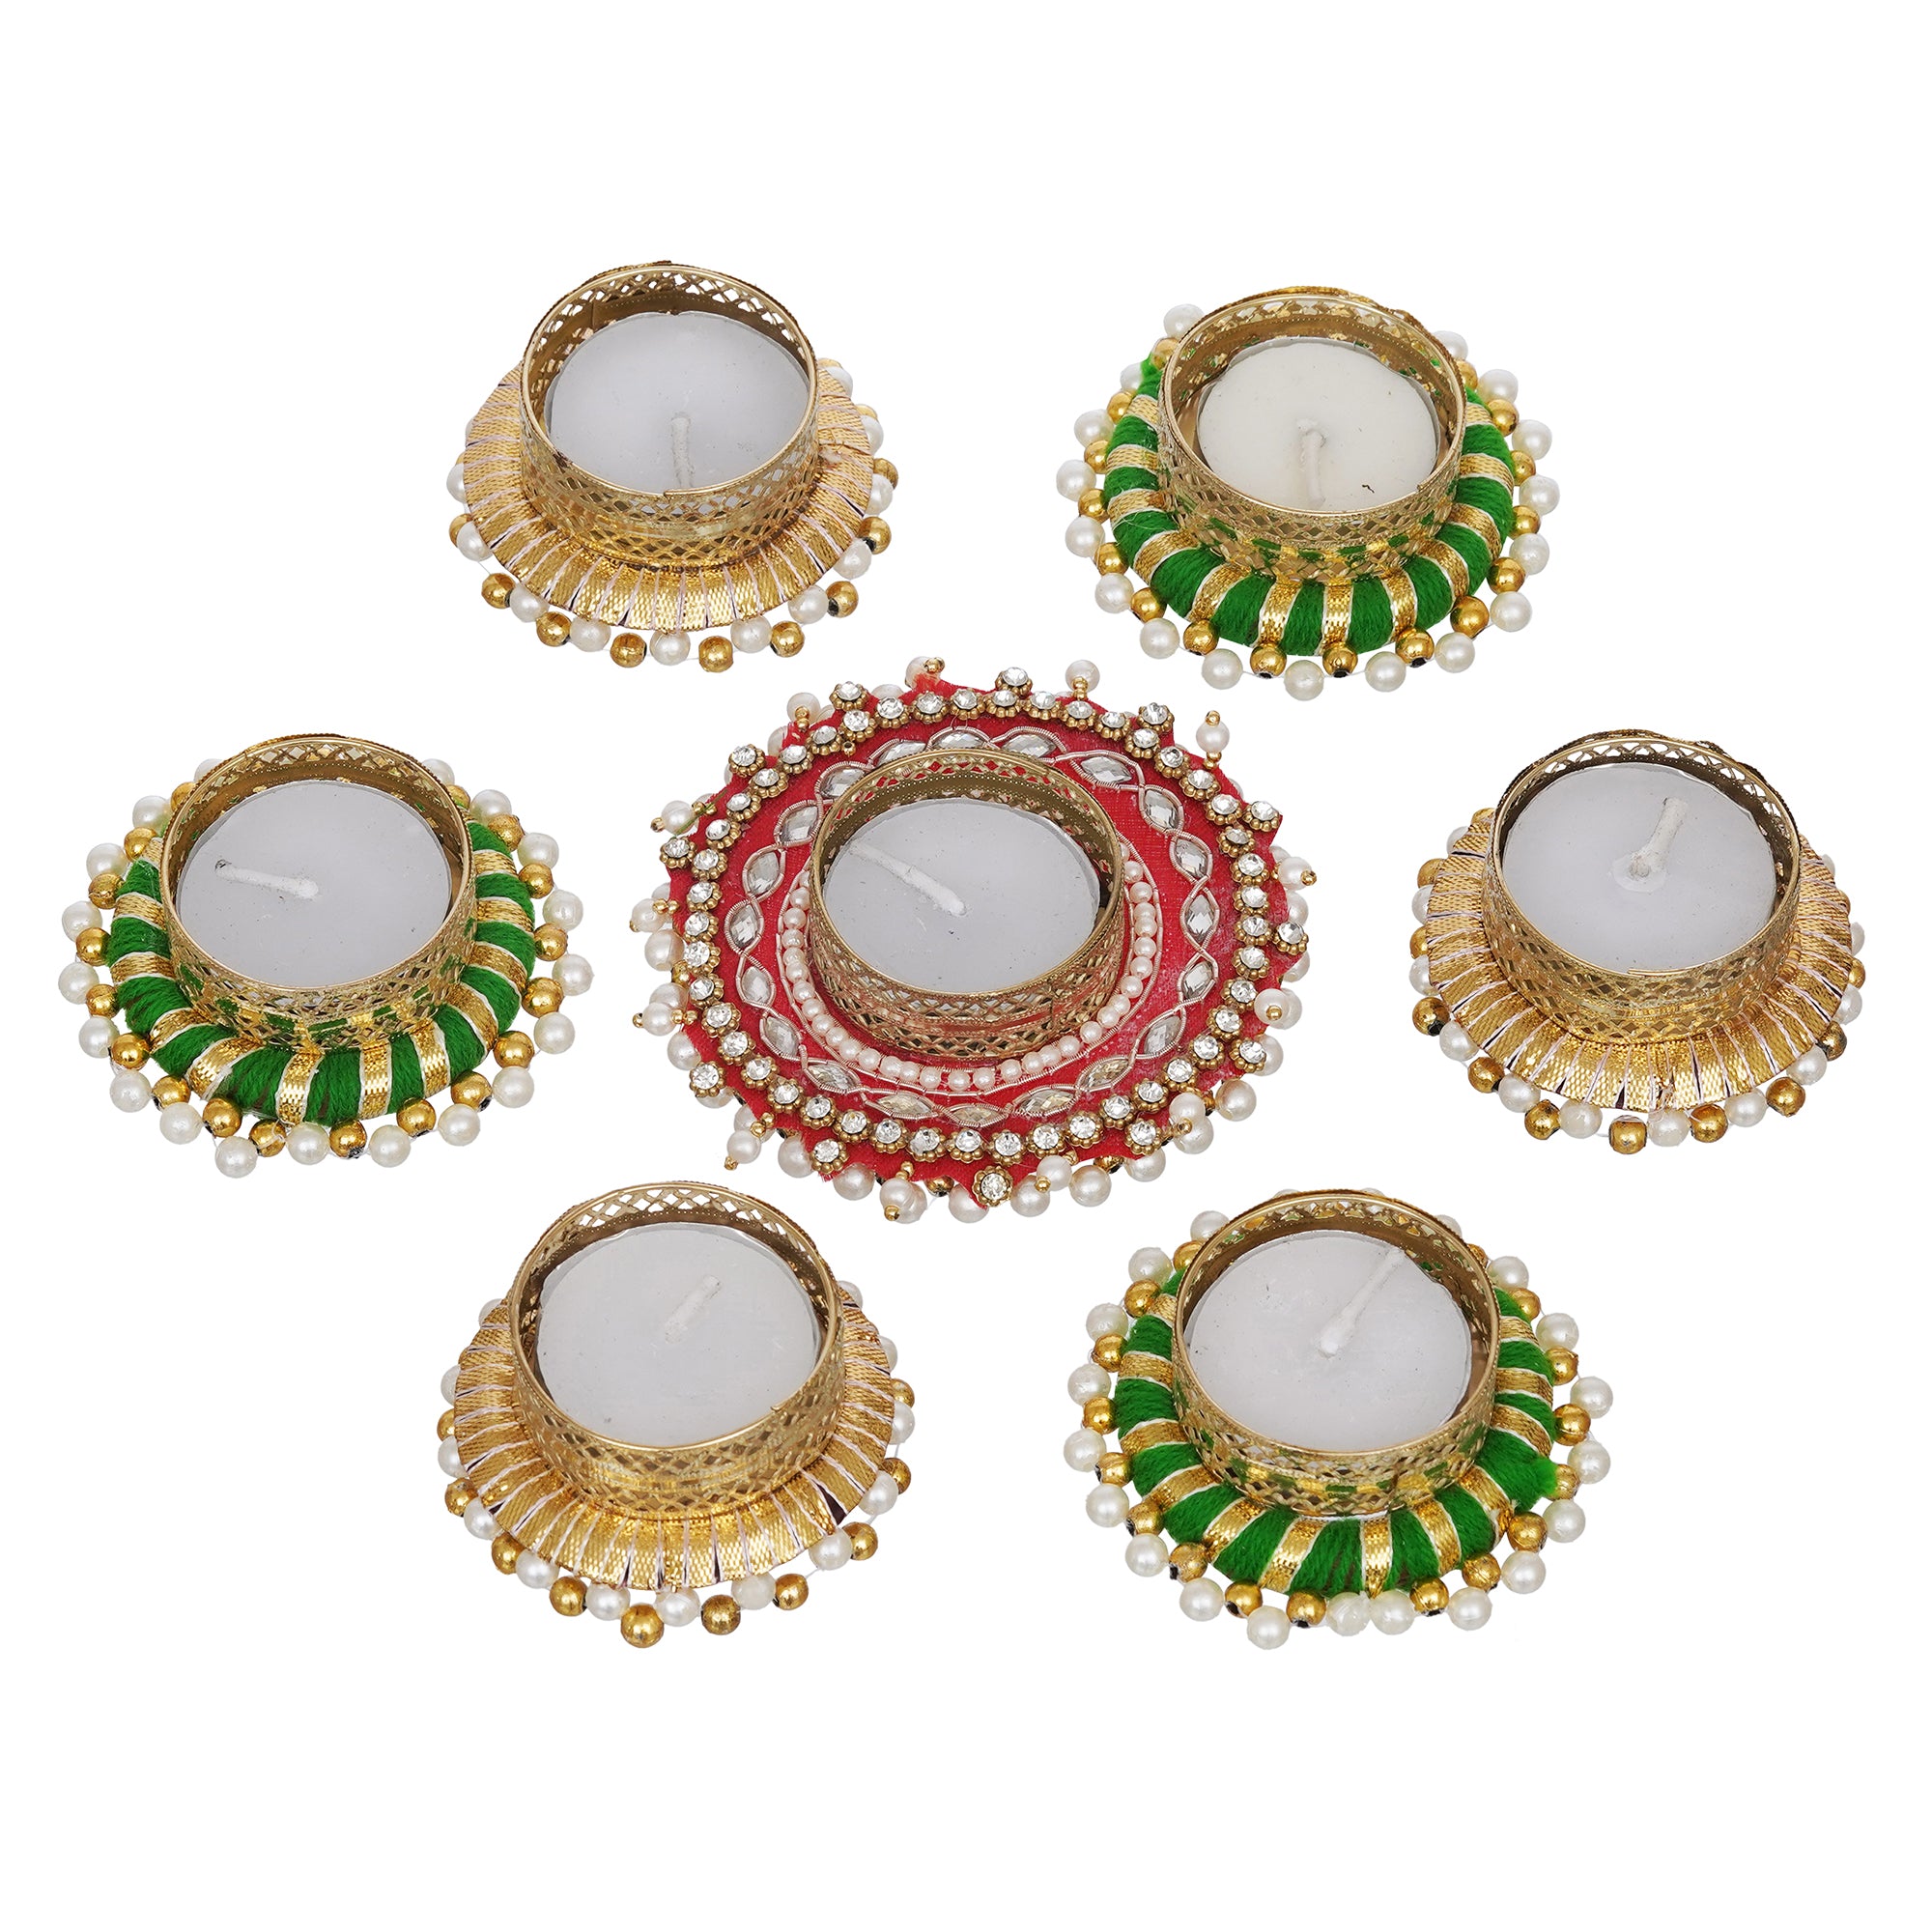 eCraftIndia Set of 7 Round Shaped Diamond Beads and Pearls Decorative Tea Light Candle Holders 2